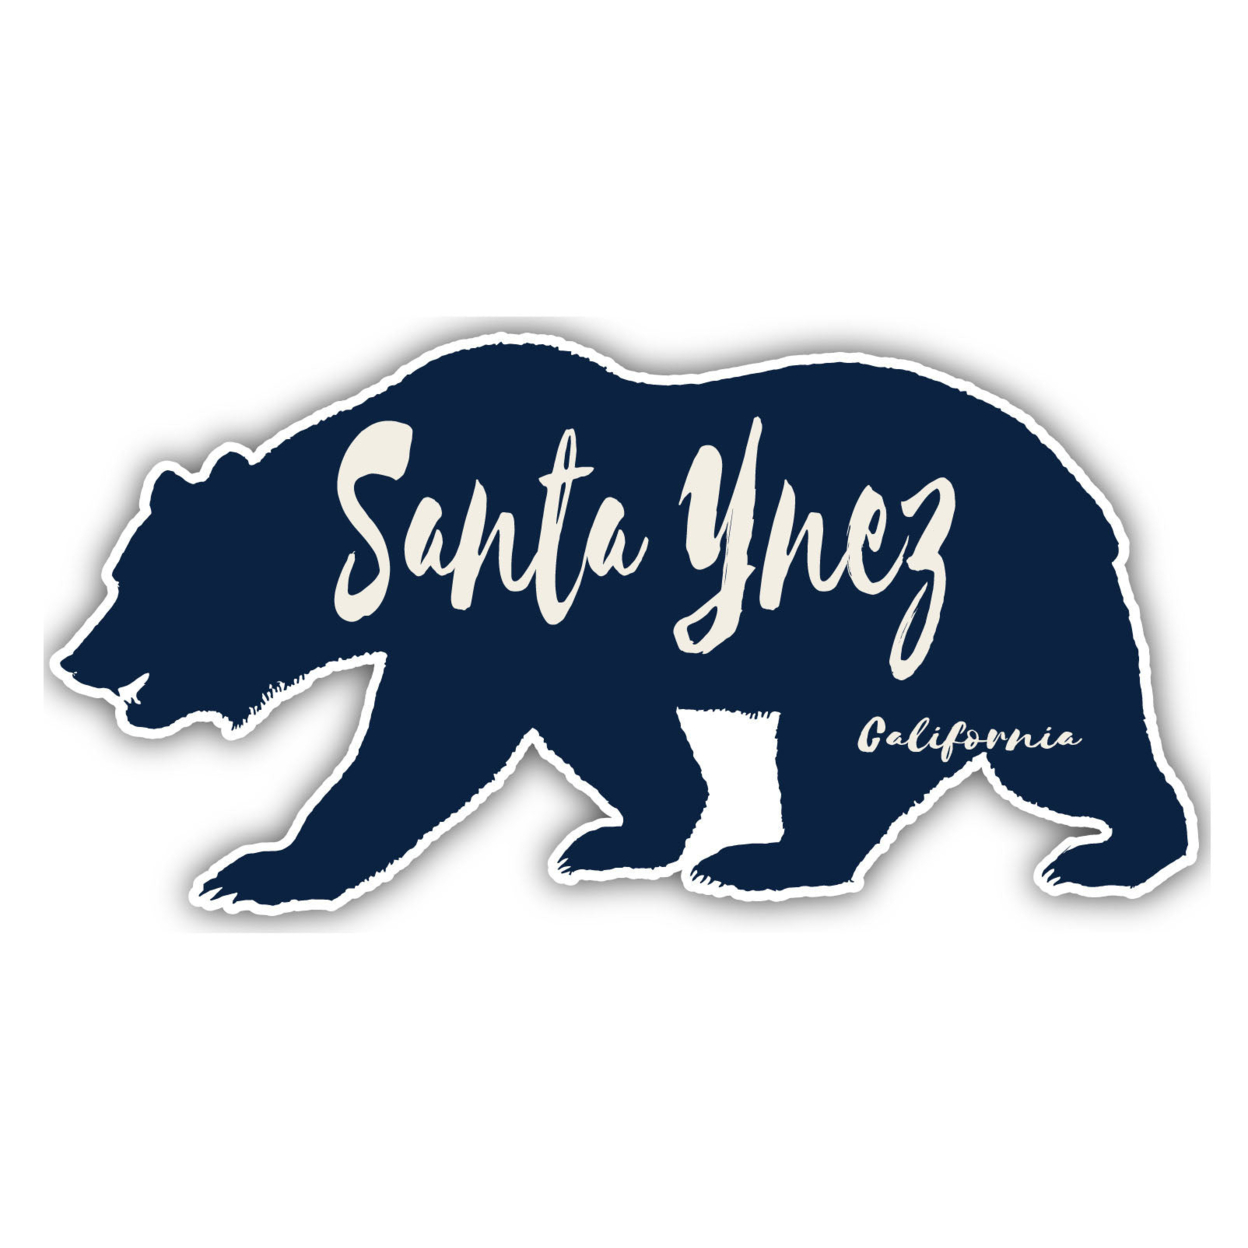 Santa Ynez California Souvenir Decorative Stickers (Choose Theme And Size) - Single Unit, 4-Inch, Tent